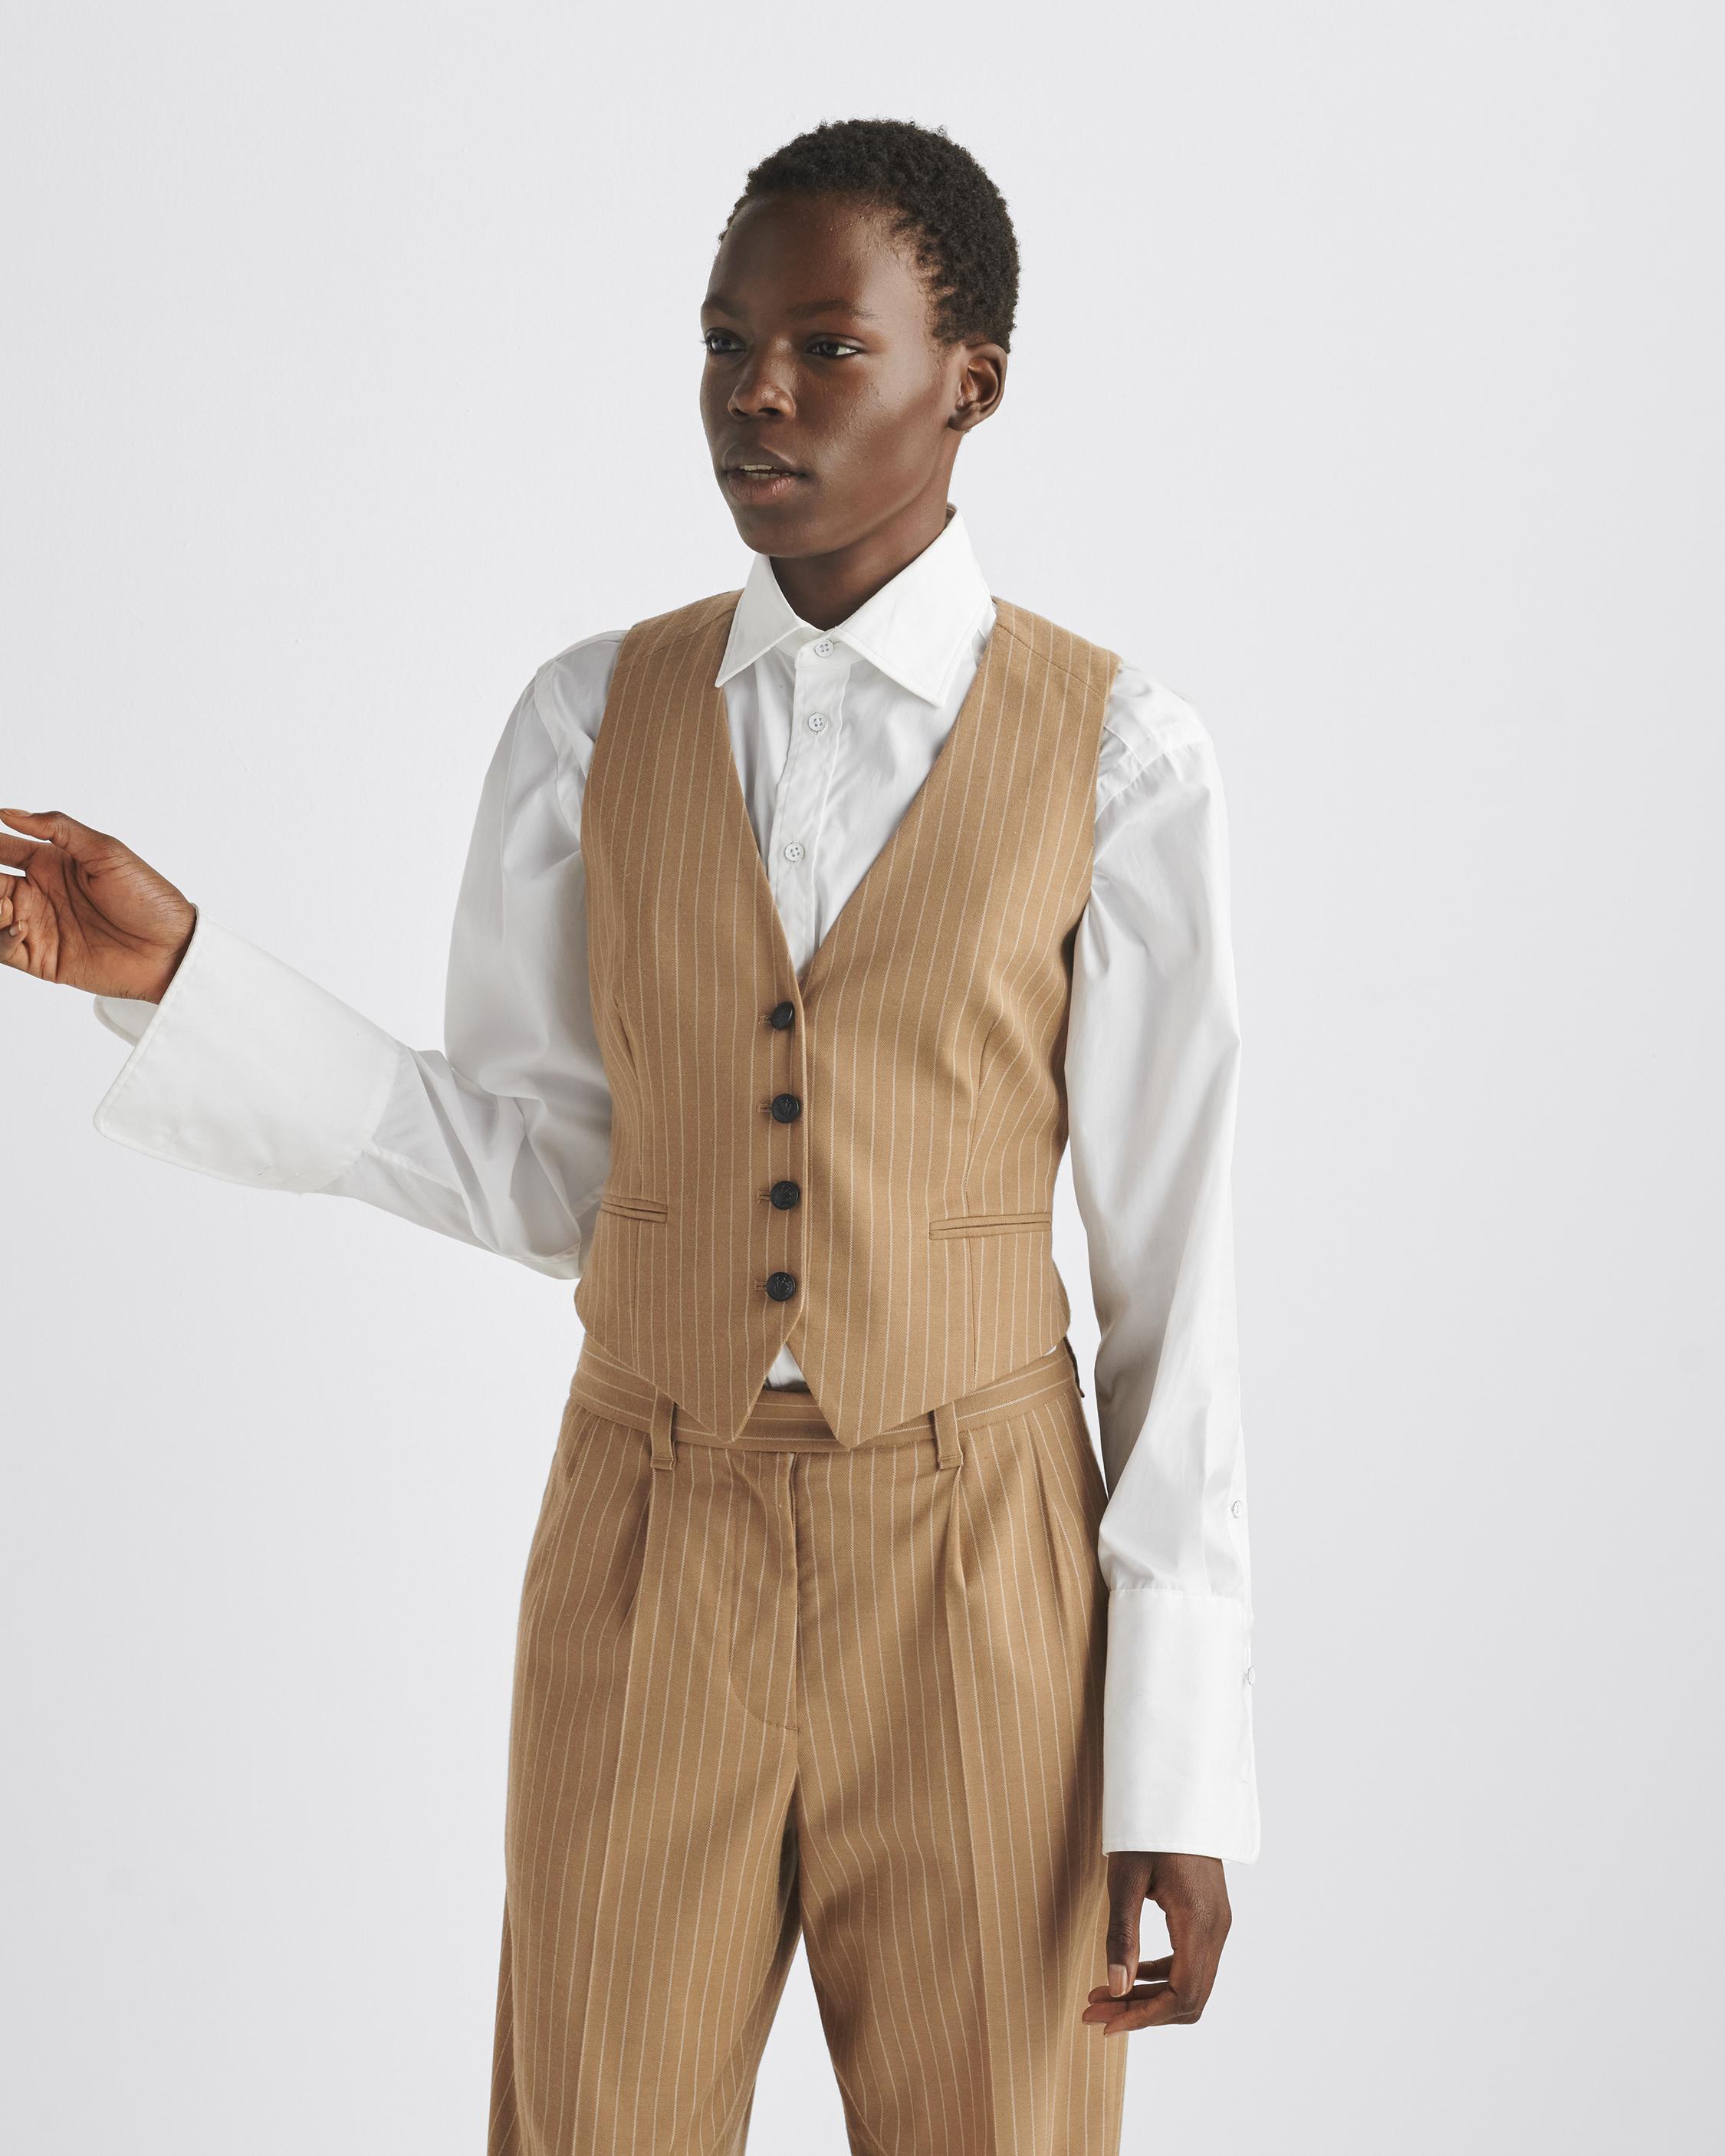 High Waist Bowtie Striped Pants – Trend Apparel Retail Inc